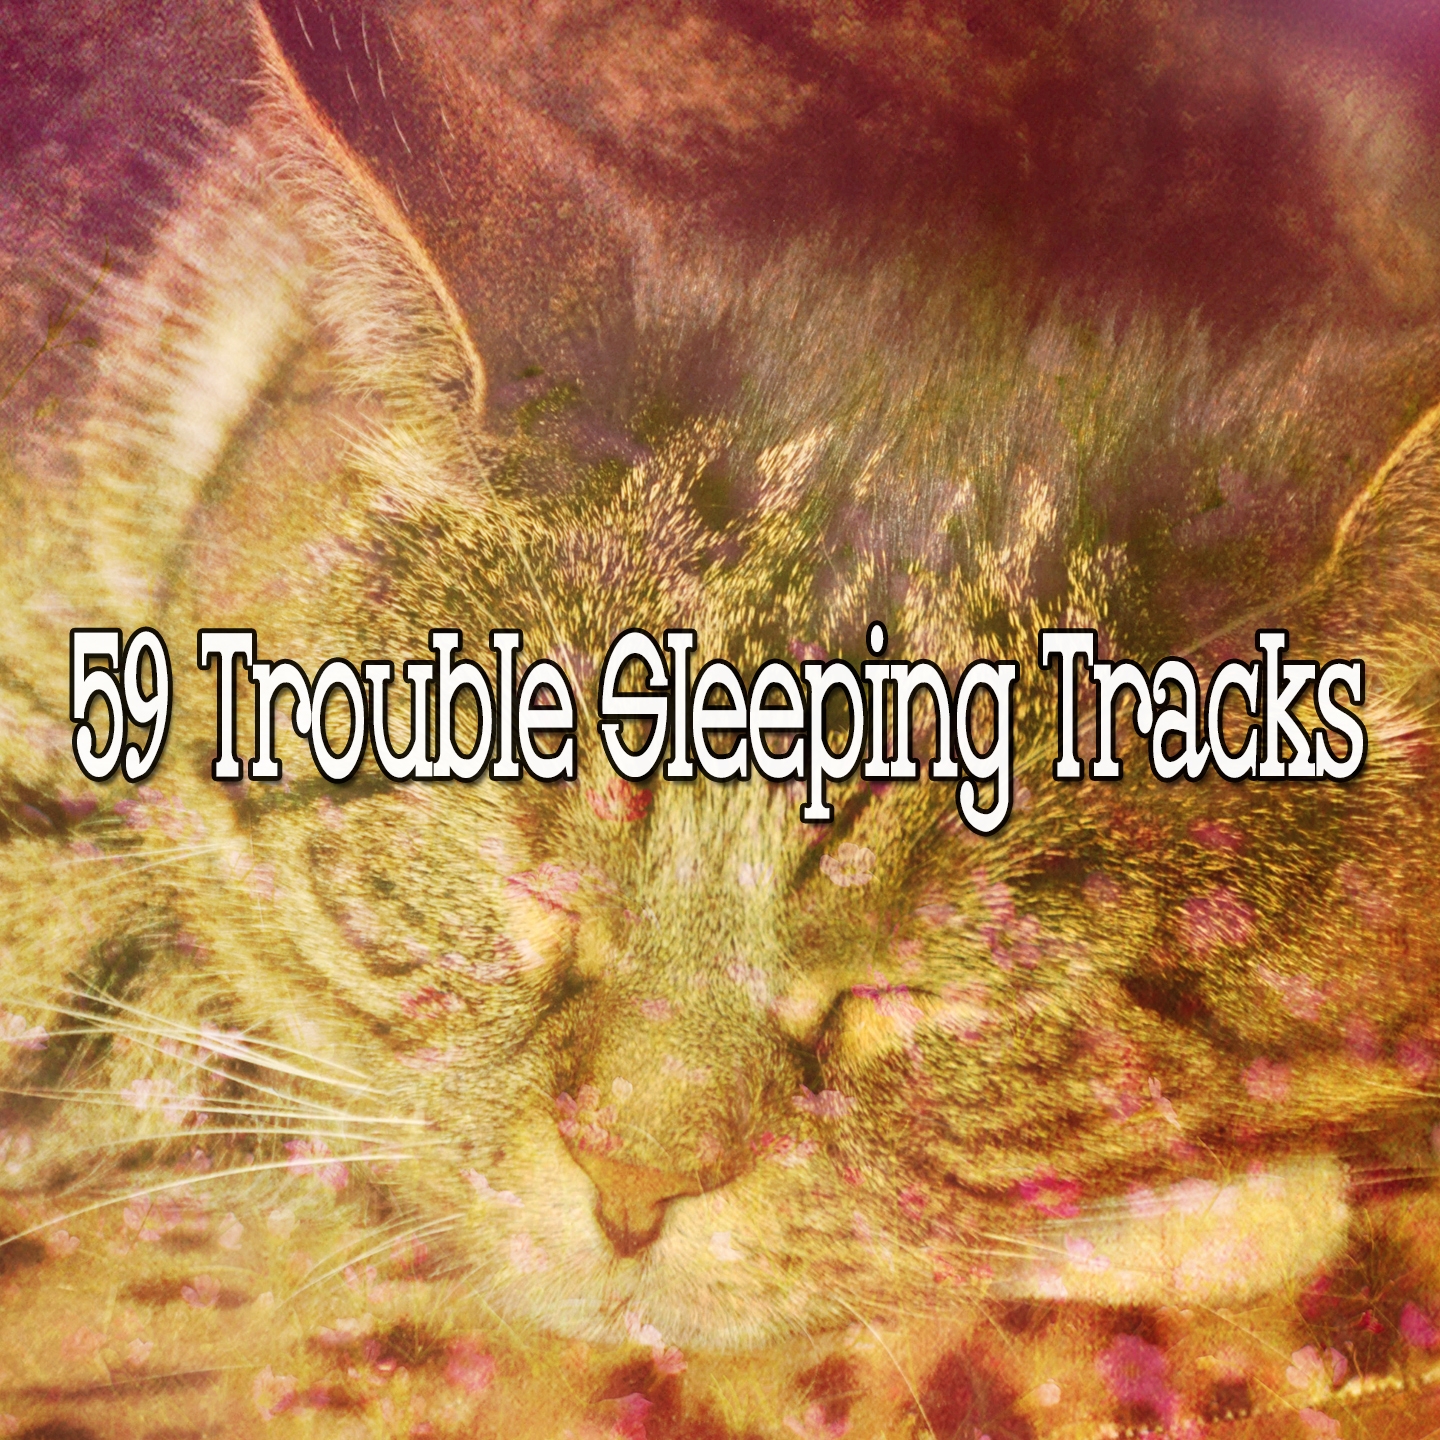 59 Trouble Sleeping Tracks